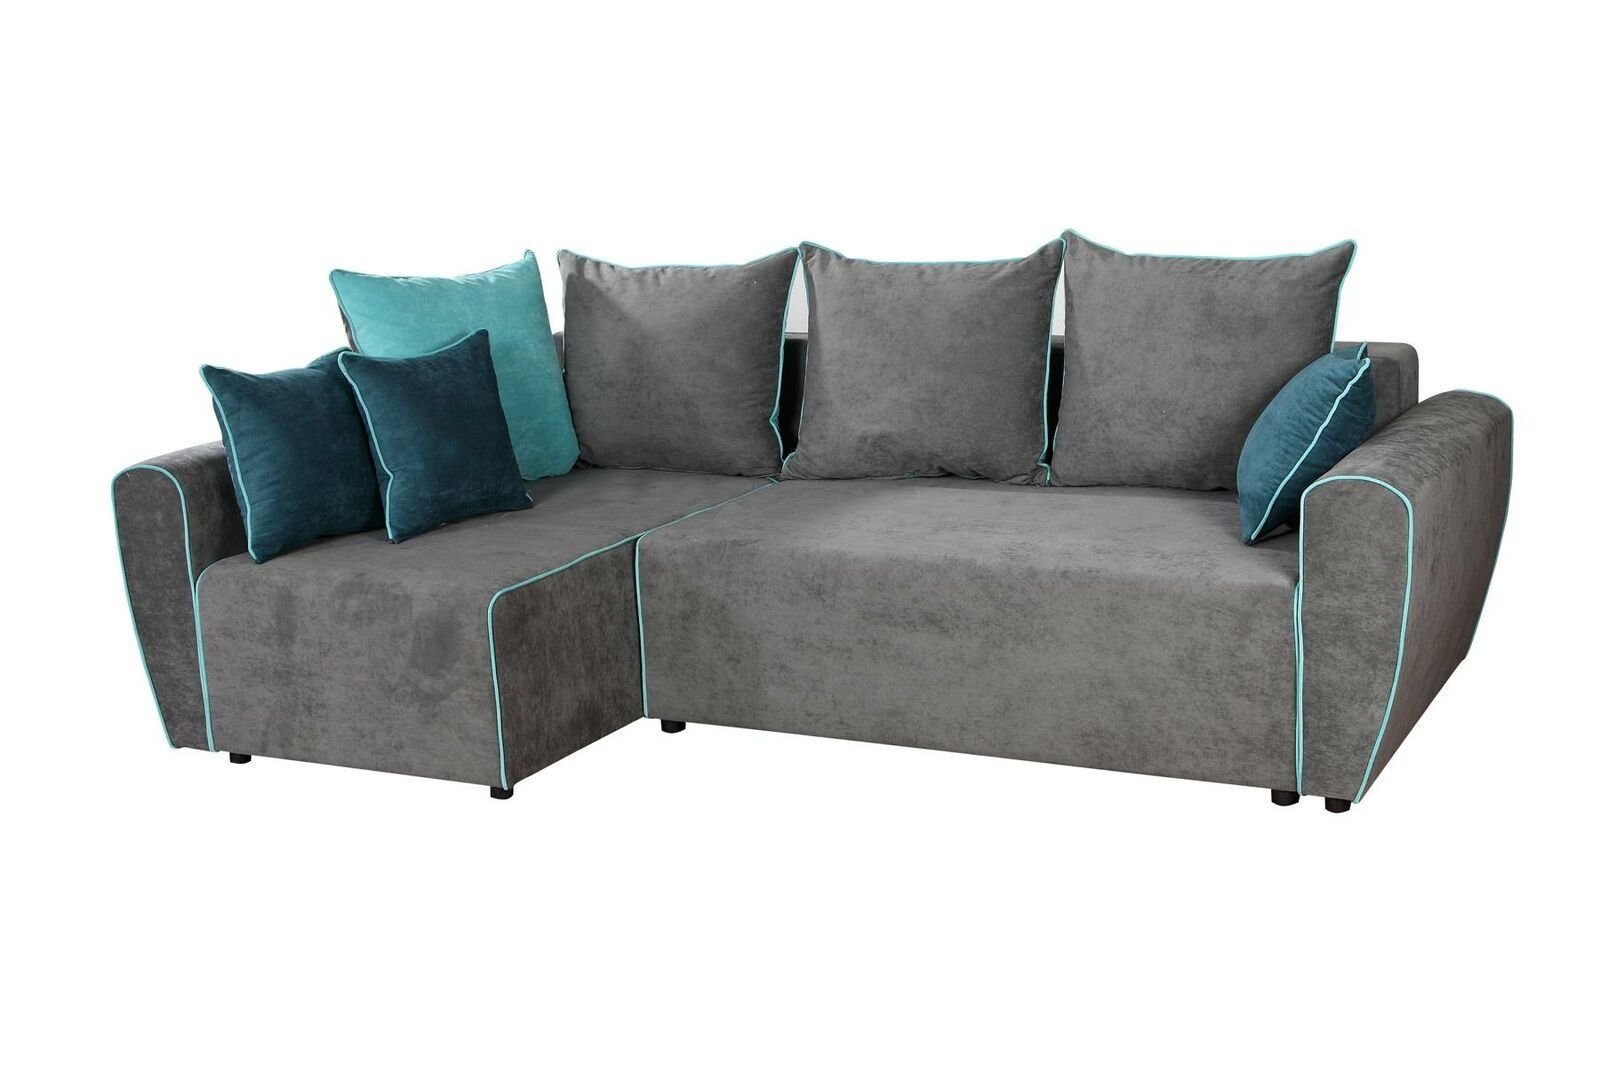 JVmoebel Sofa Big Sofa Couch Ecksofa Schlaf Polster Garnitur Stoff Wohnlandschaft, Made in Europe